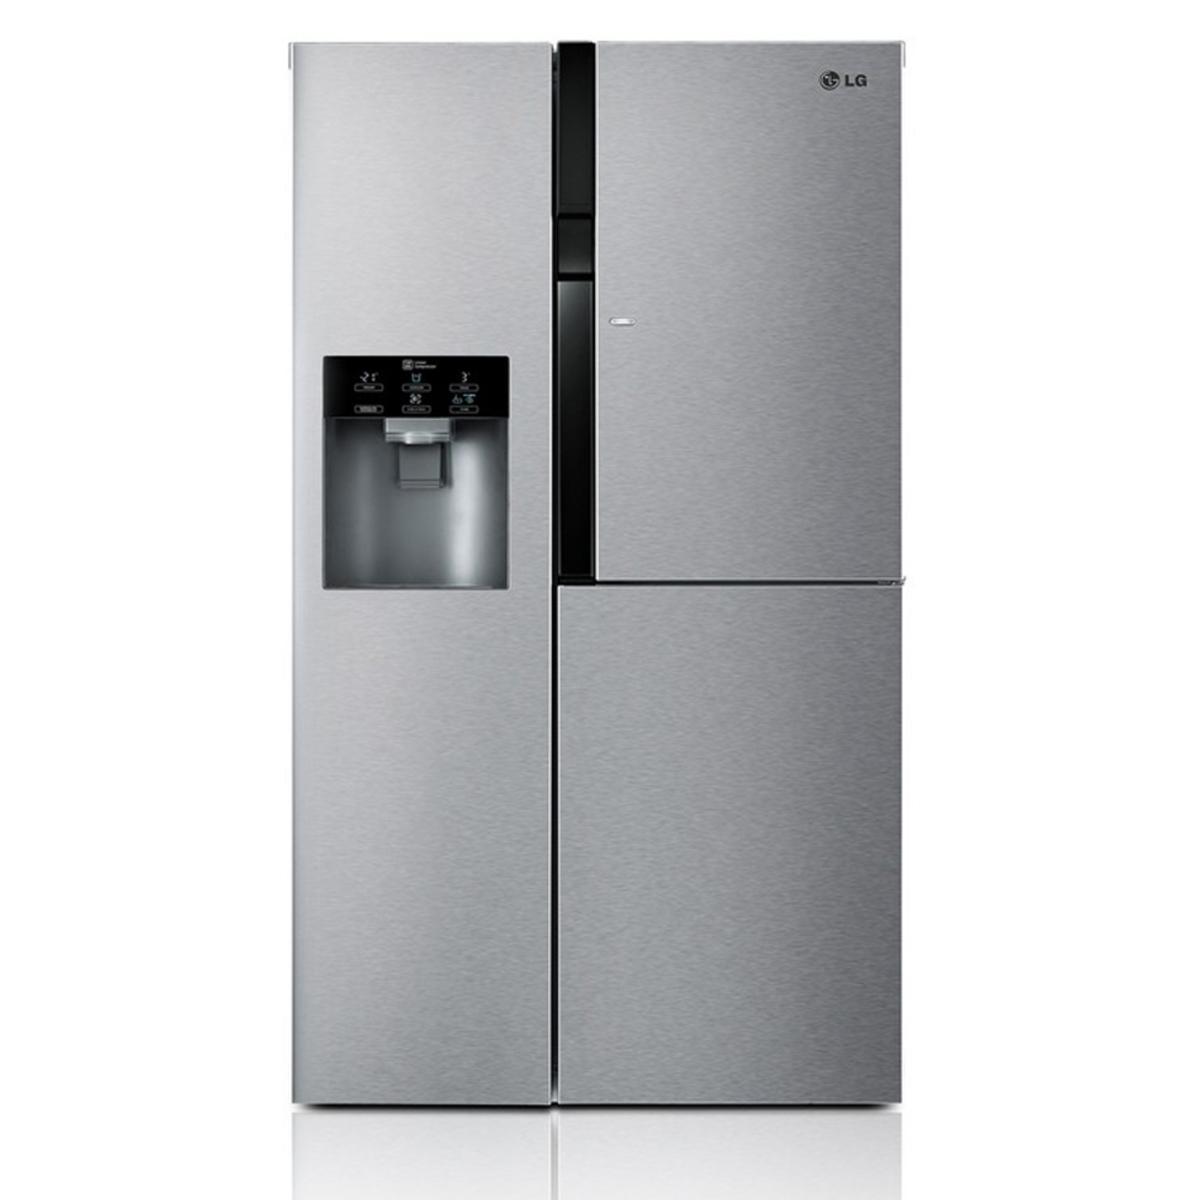 Холодильник с ледогенератором купить. LG GC-j237 jaxv. Холодильник LG GC-j247 JABV. Холодильник LG GC-j237 jaxv. Холодильник LG Сайд бай Сайд.